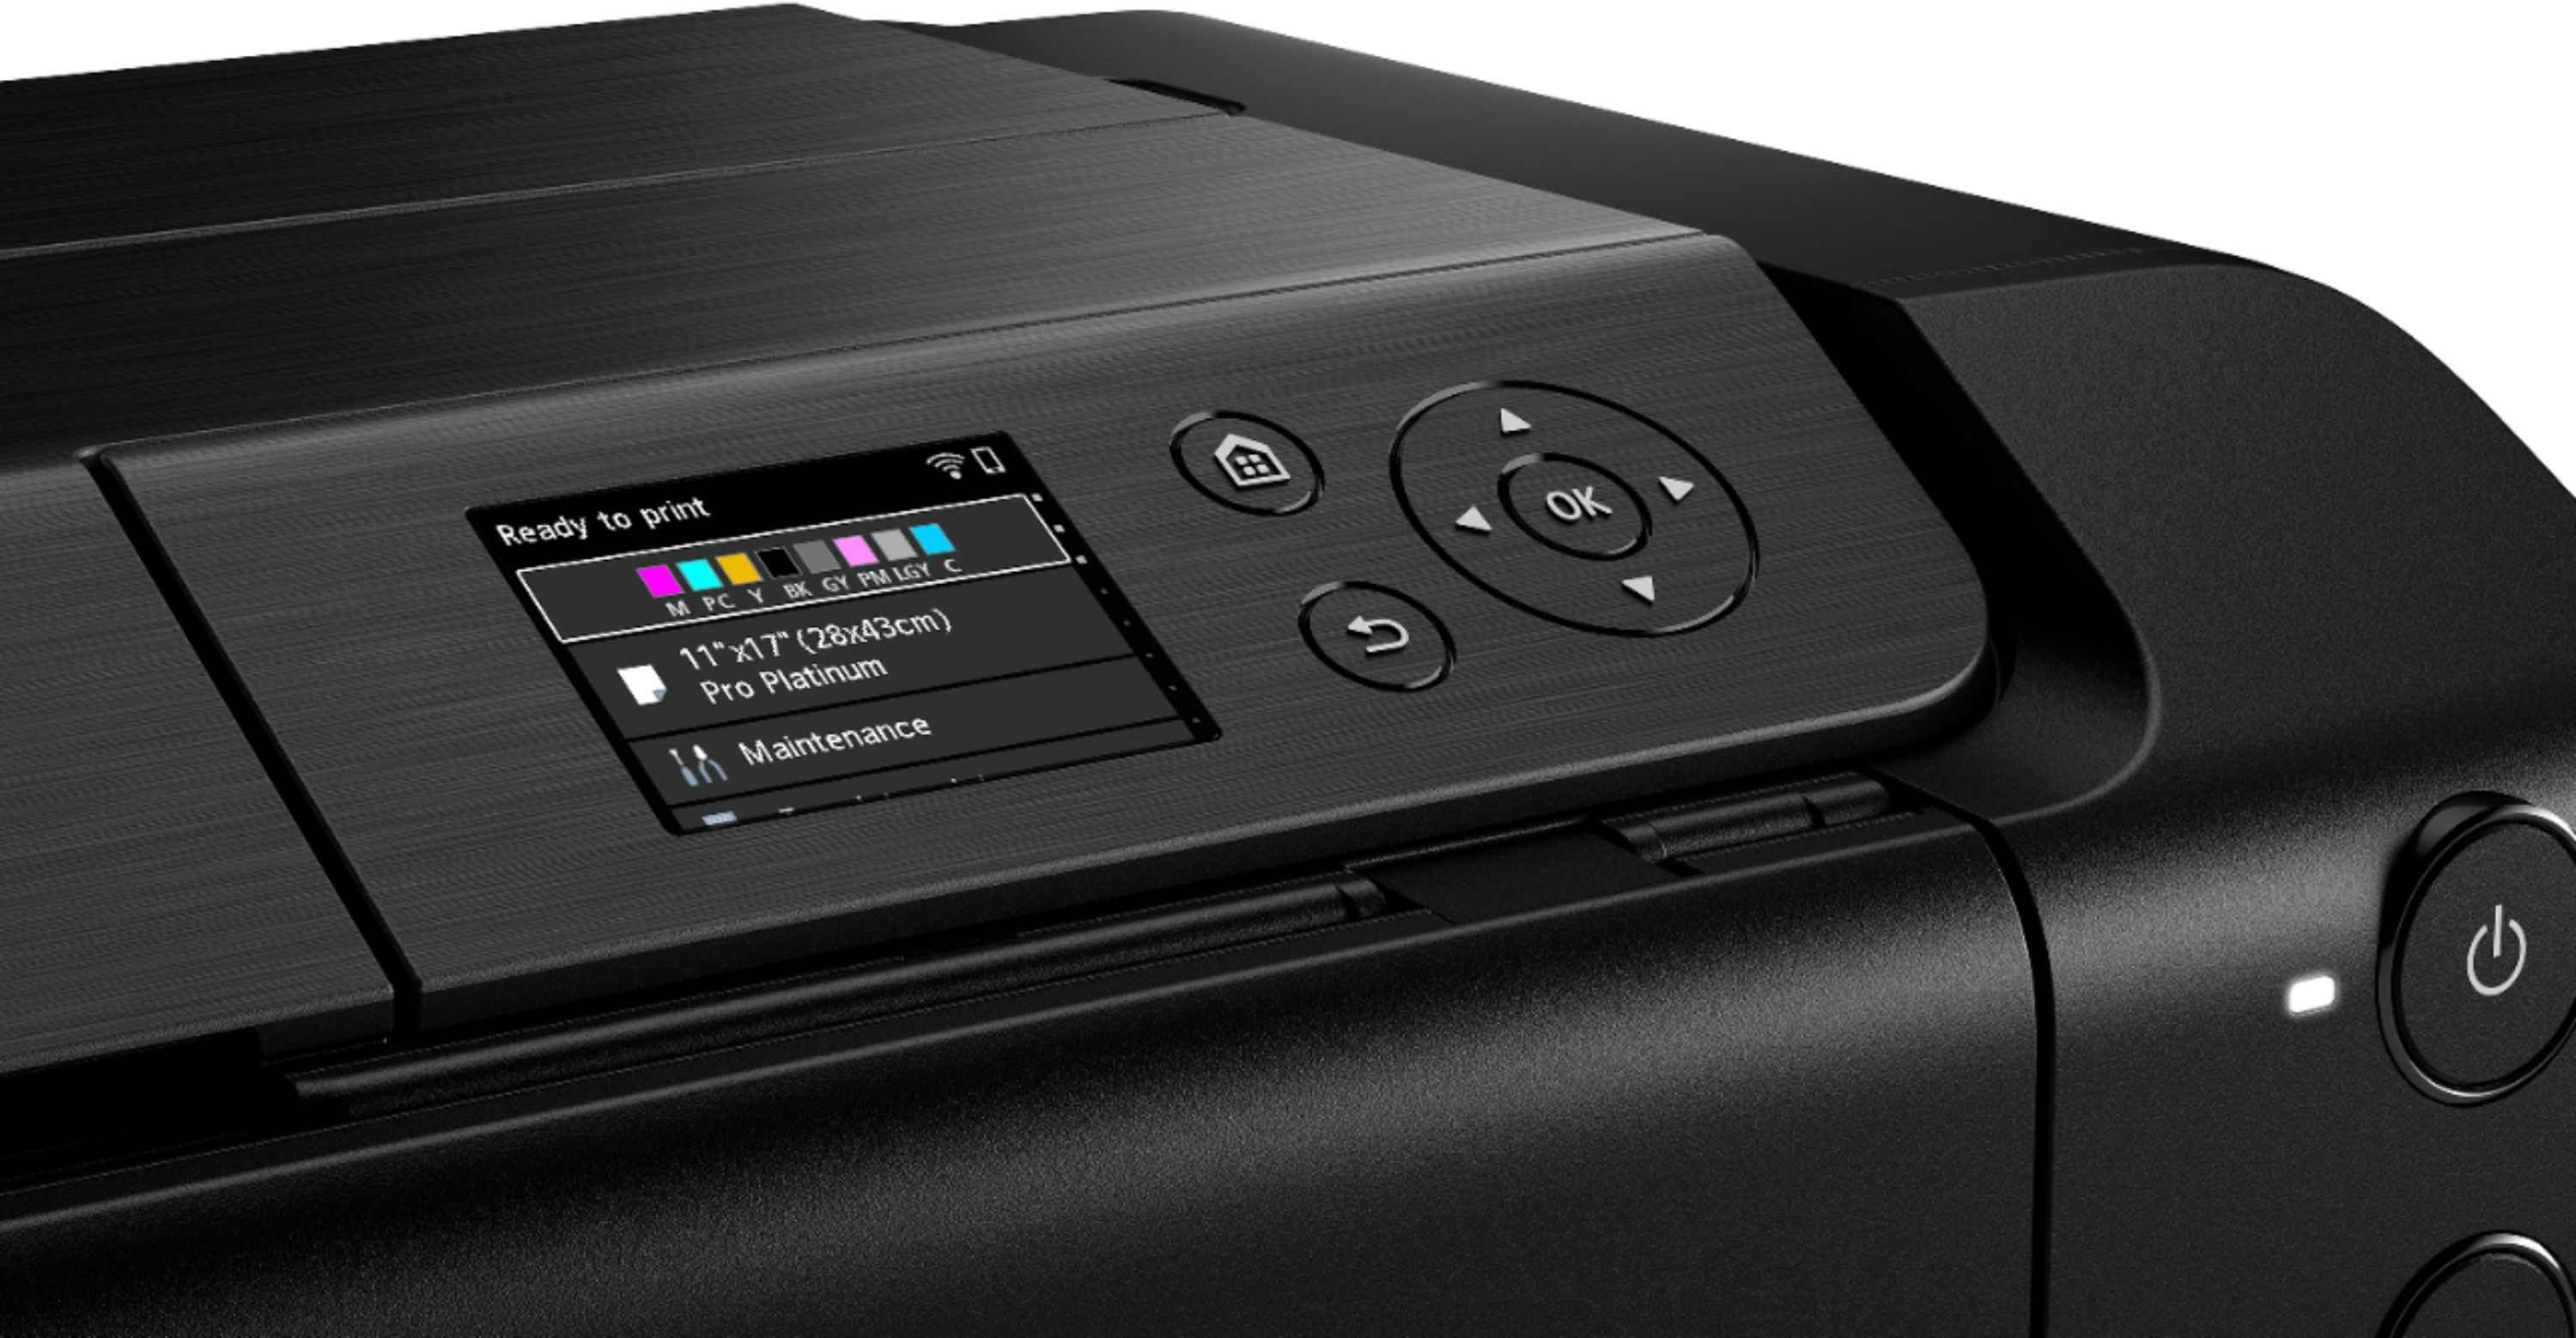 customer-reviews-canon-pixma-pro-200-wireless-inkjet-printer-black